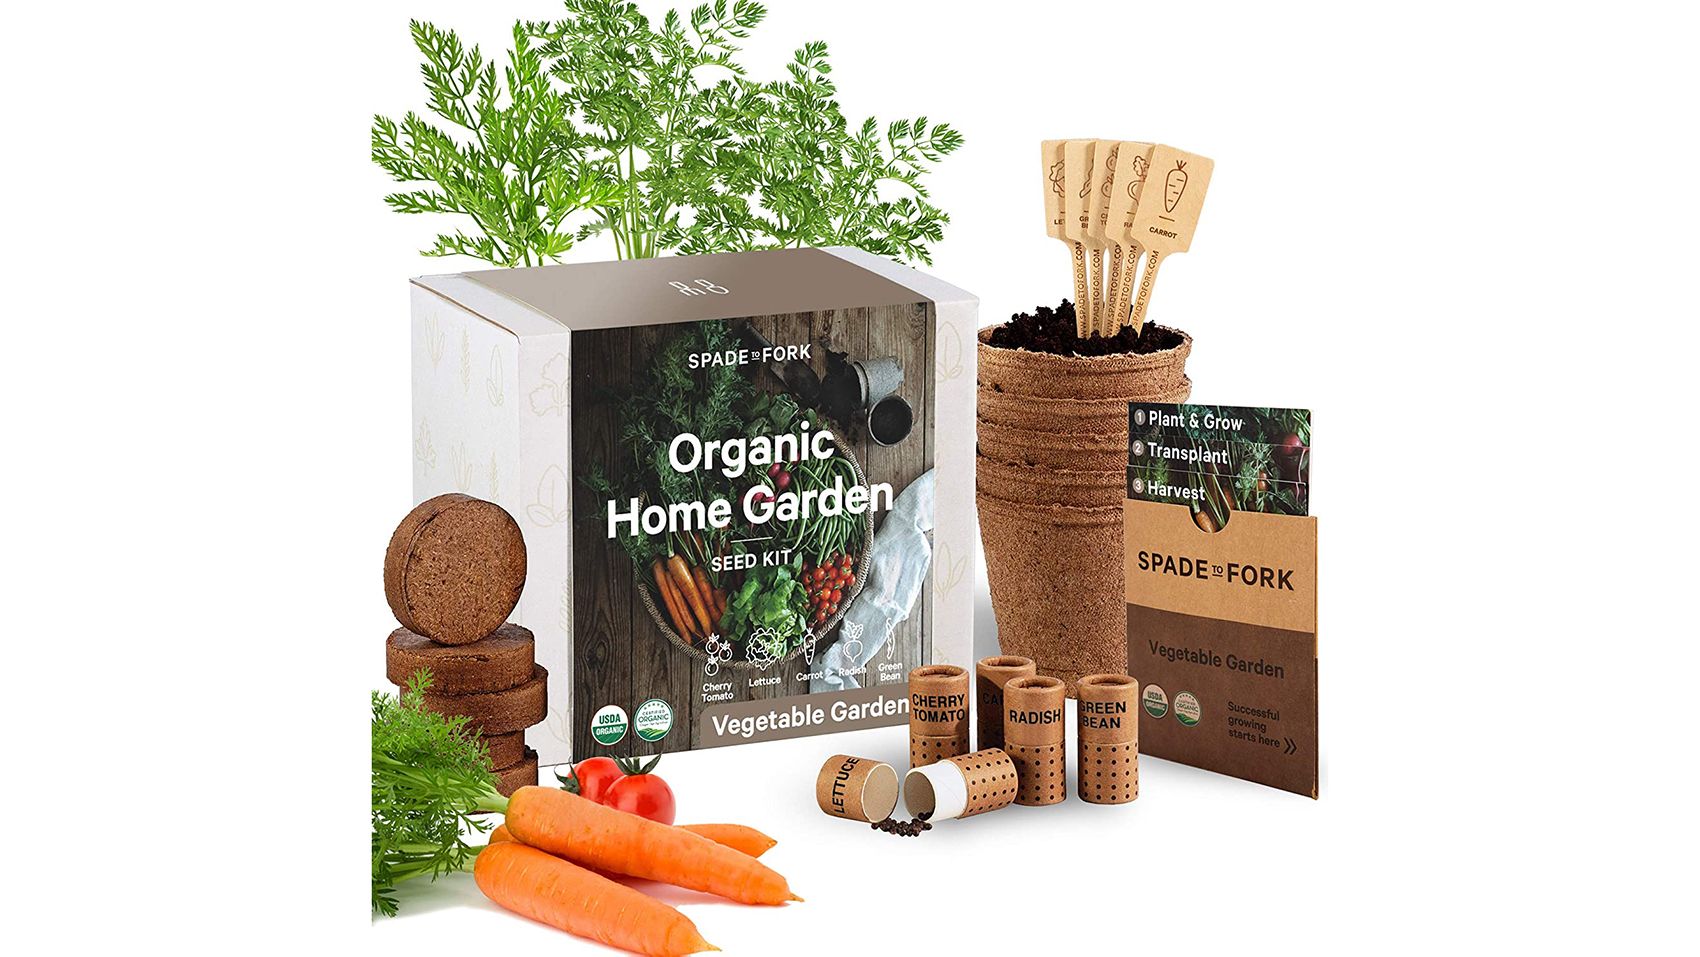 Indoor Herb Garden Starter Kit - Cooking Gifts for Women Gardener - Creative Kitchen Gift for Plant Lovers - Home Herb Growing, Gardening Seeds + Step